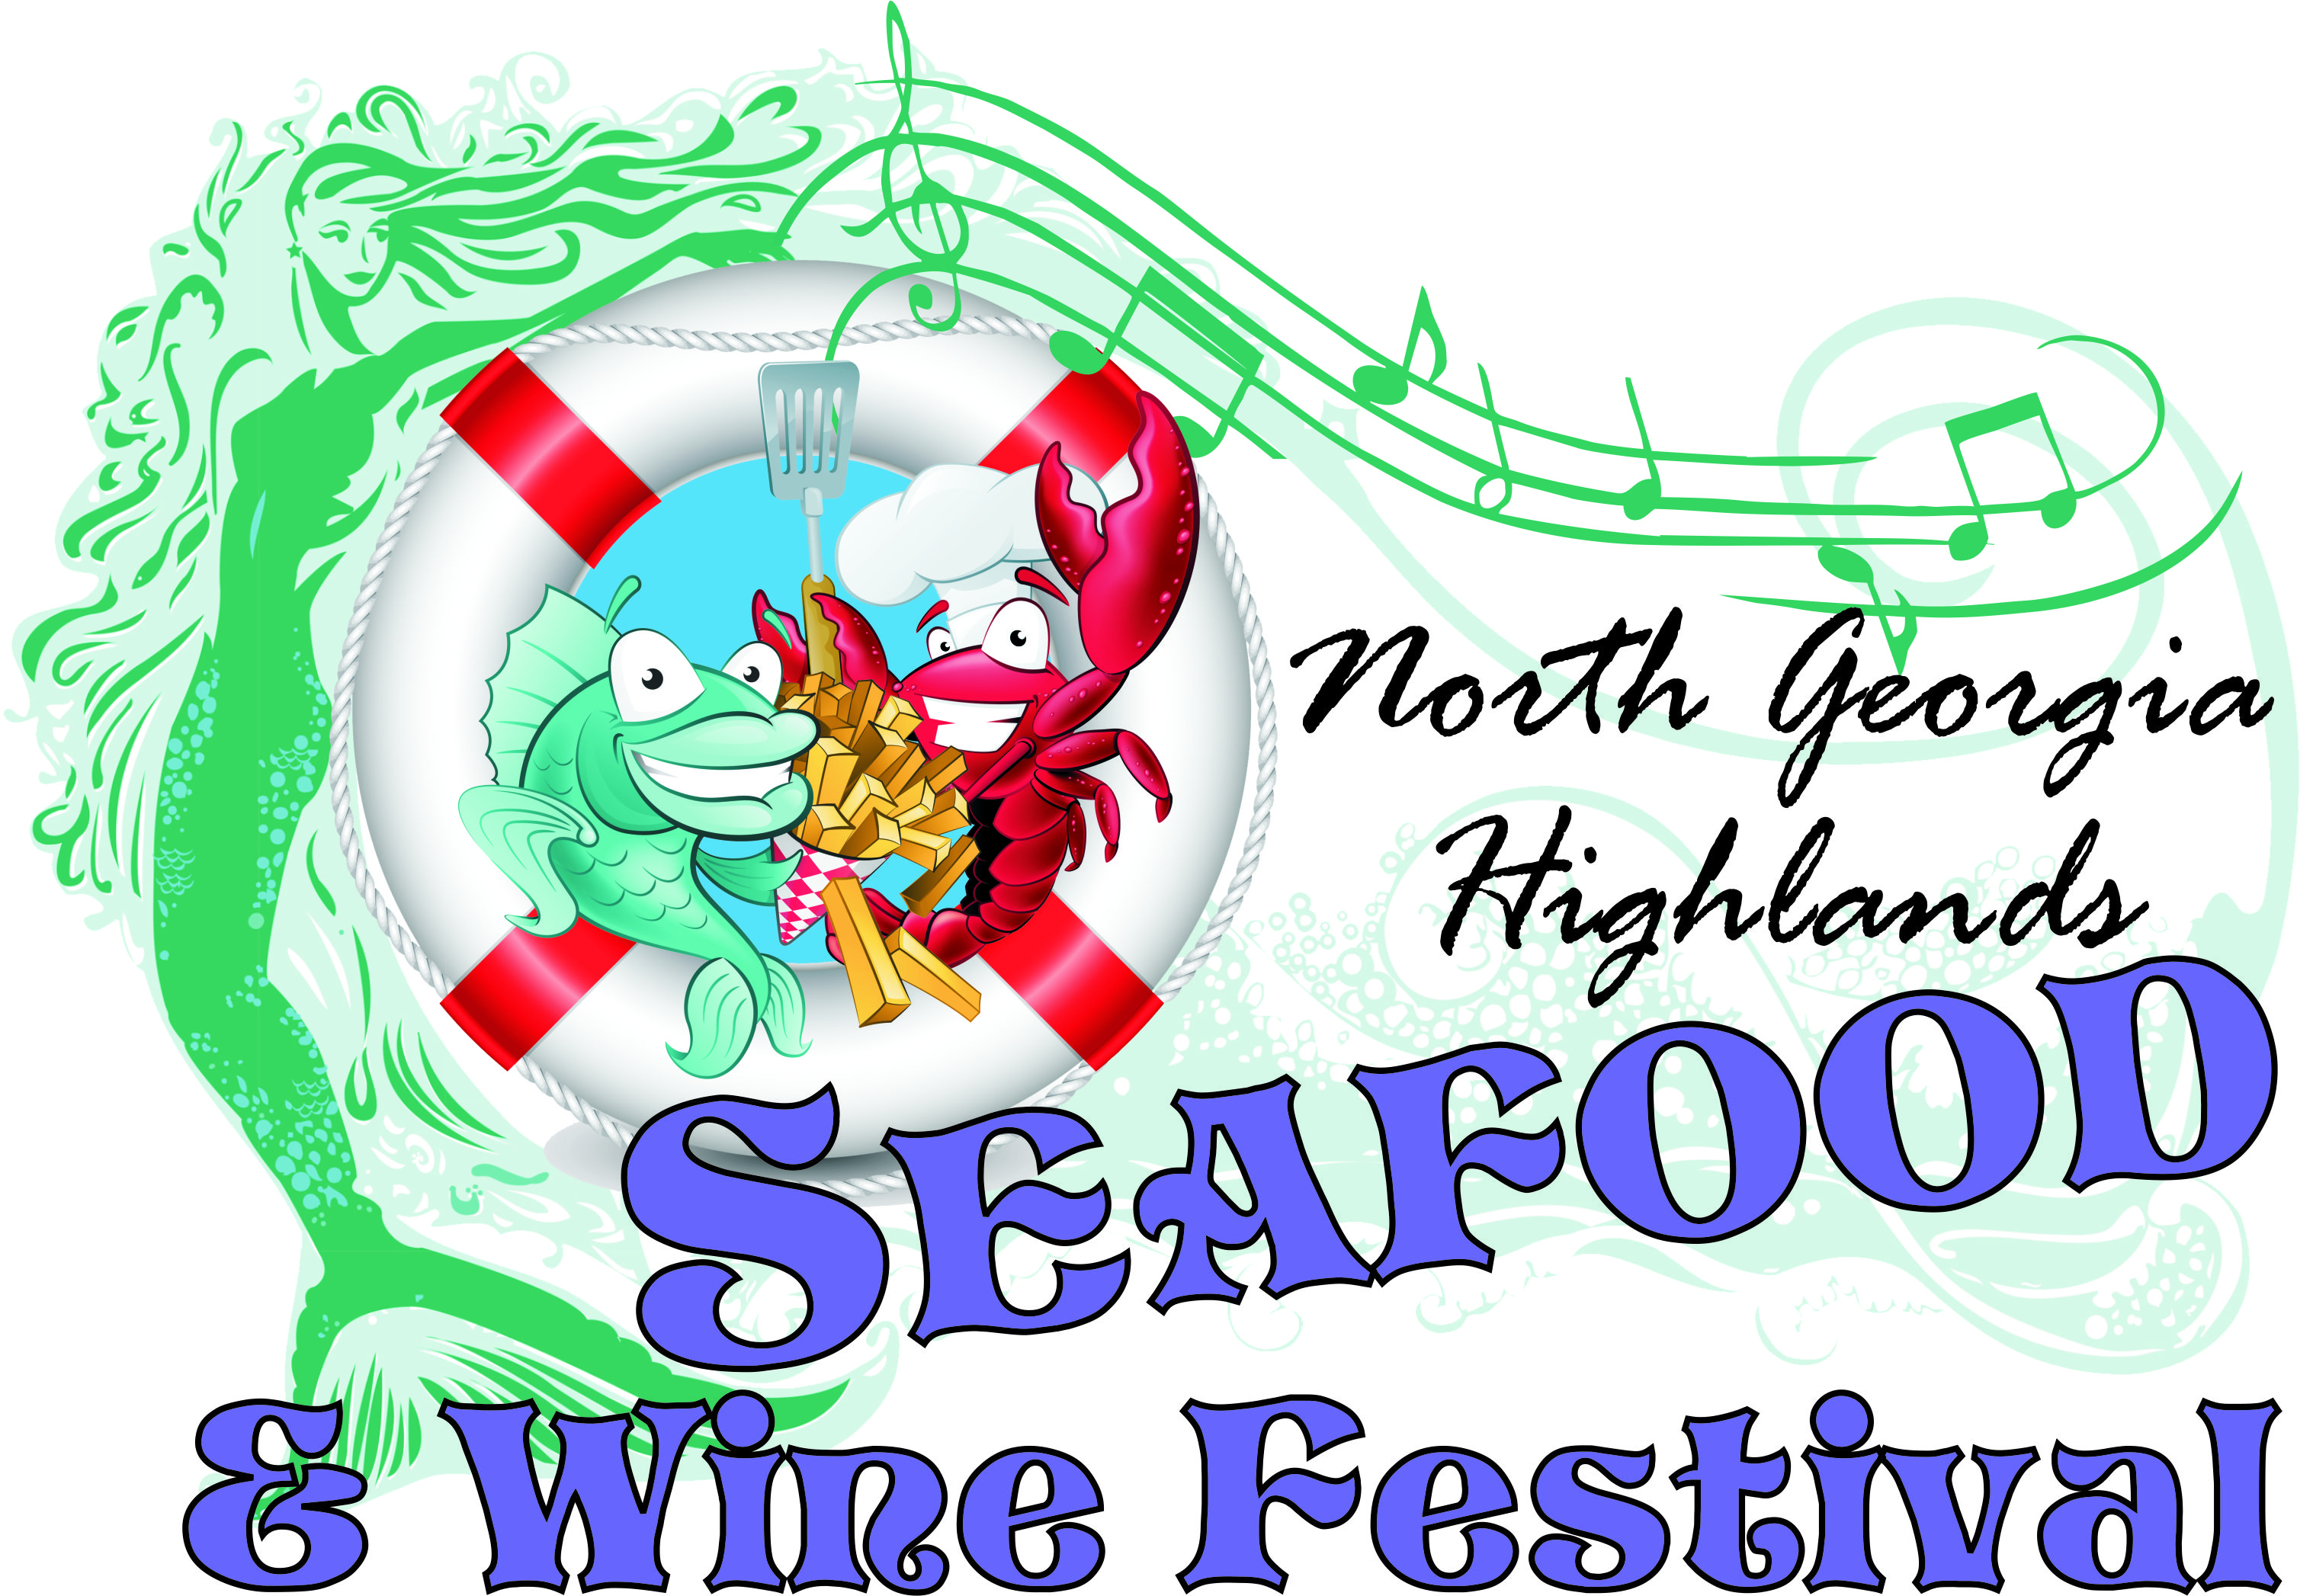 2021 North Georgia Highlands Seafood and Wine Festival